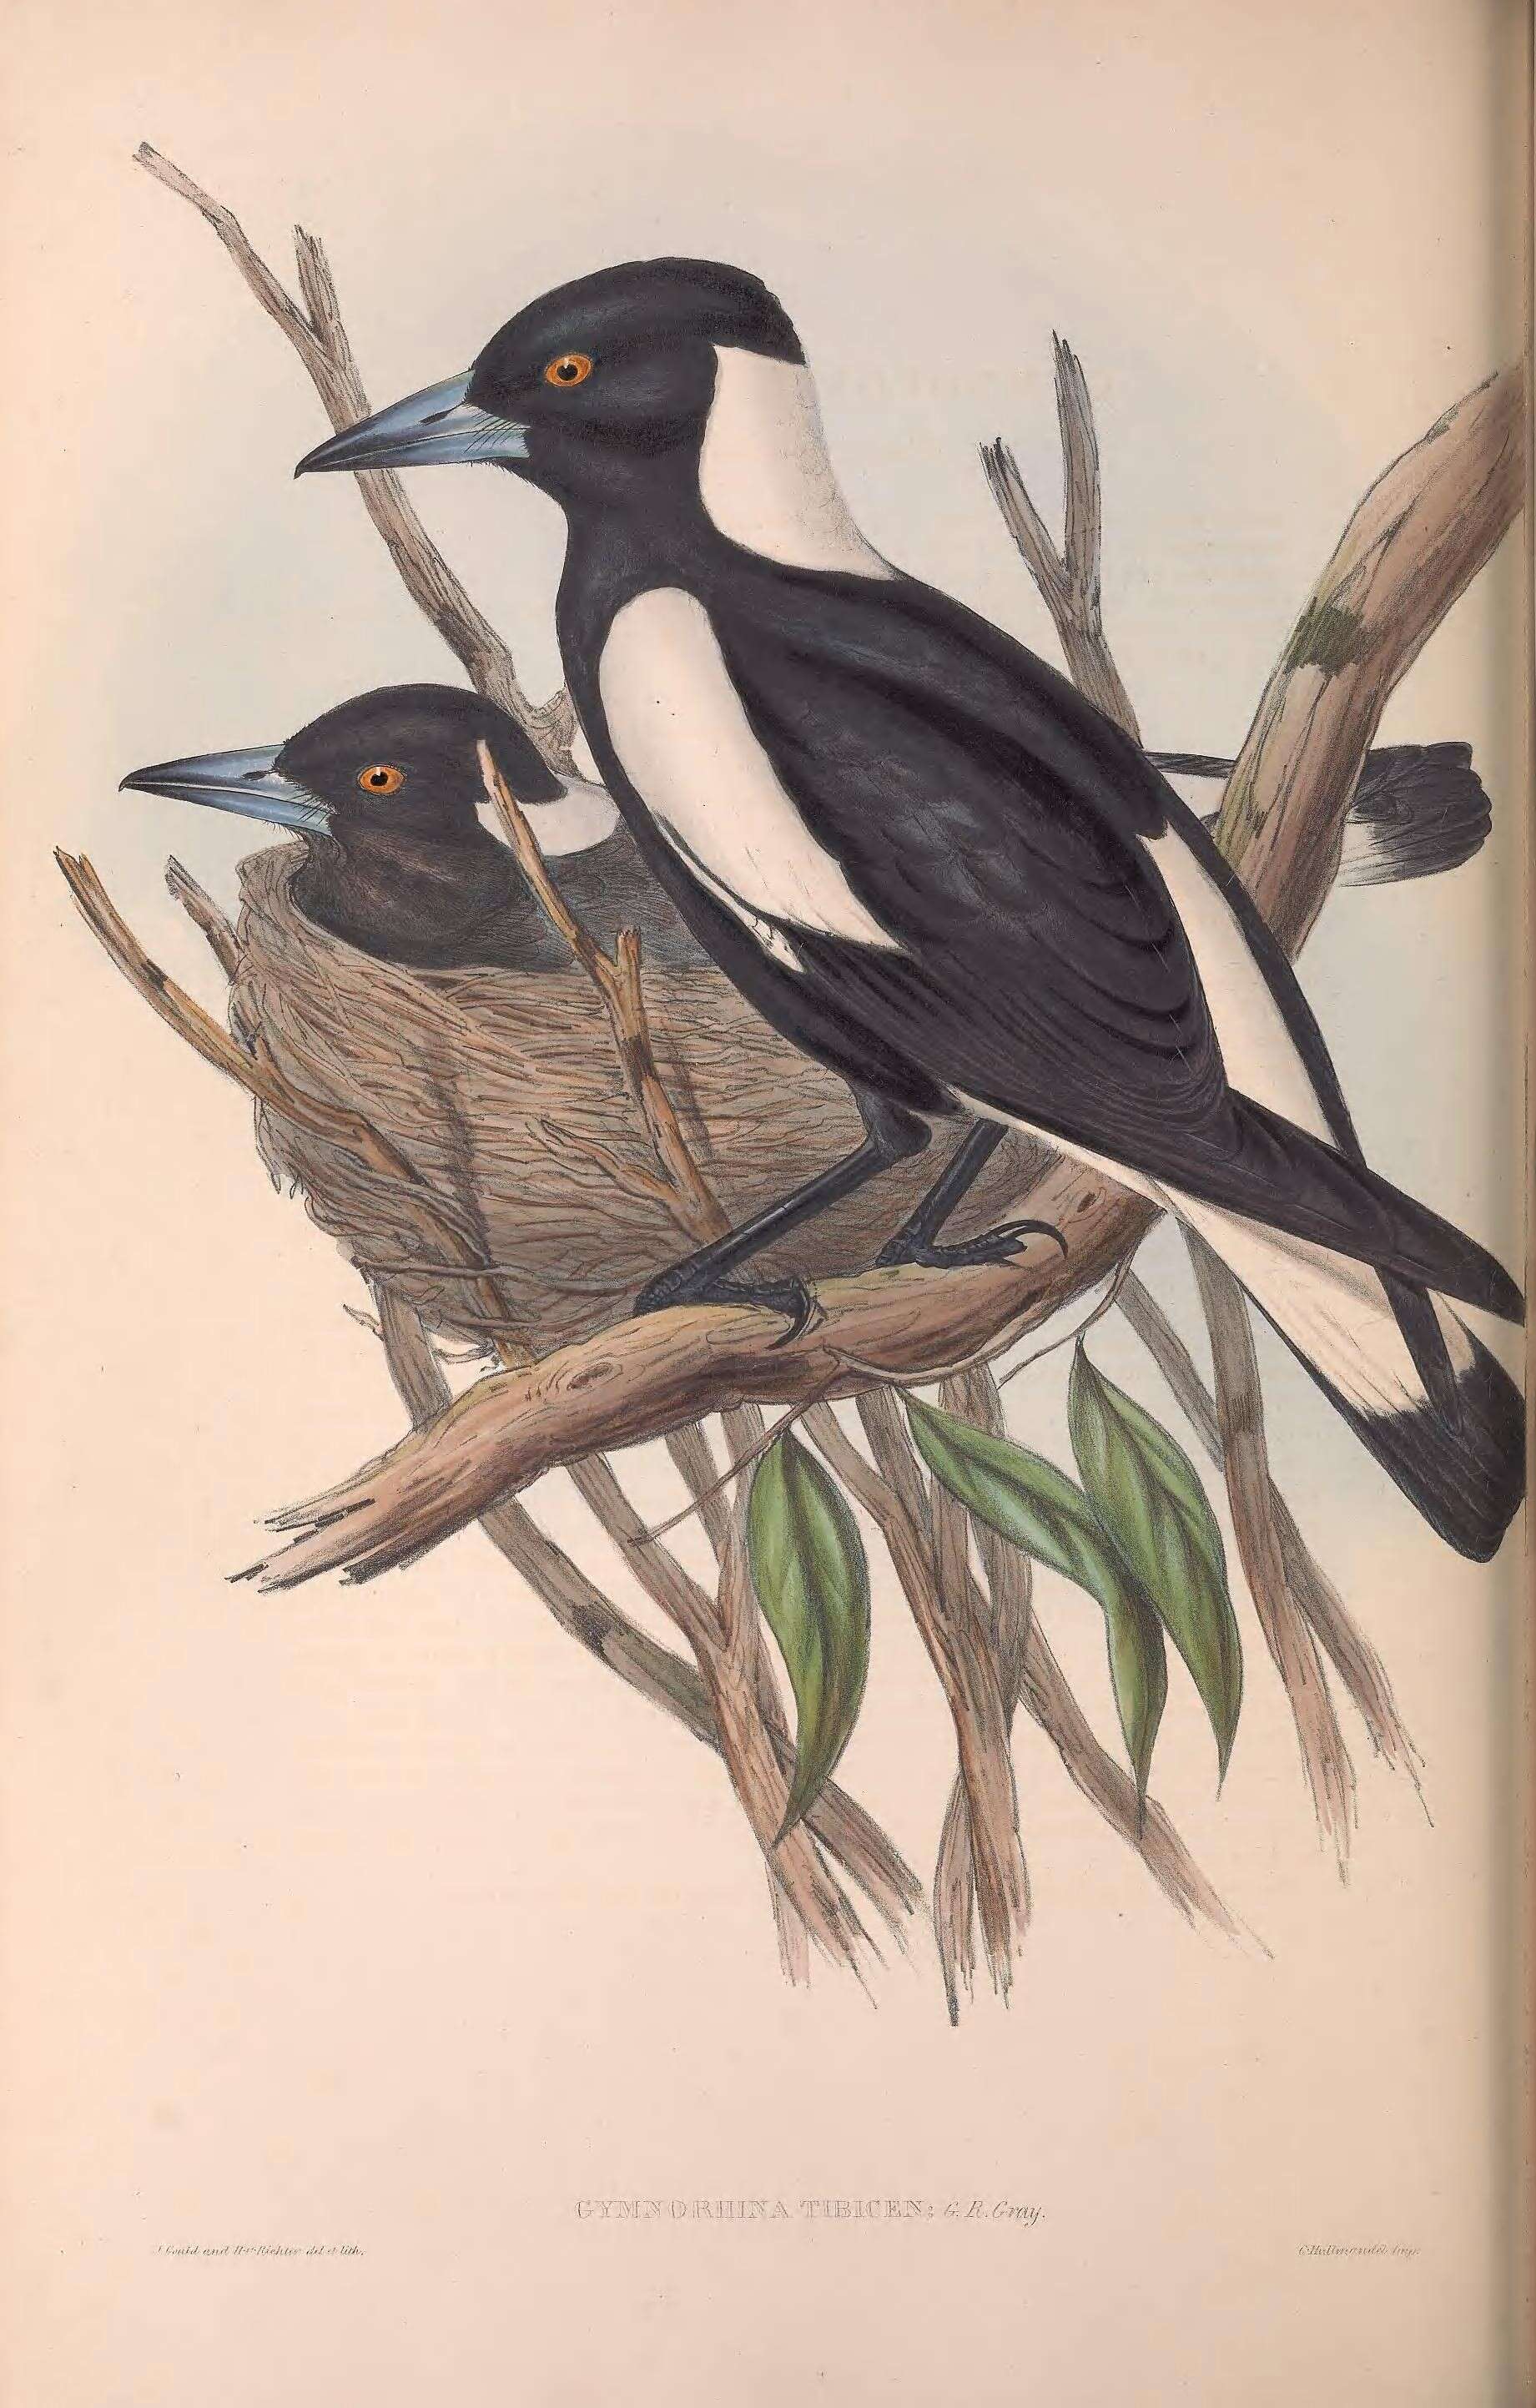 Image of Gymnorhina Gray & GR 1840